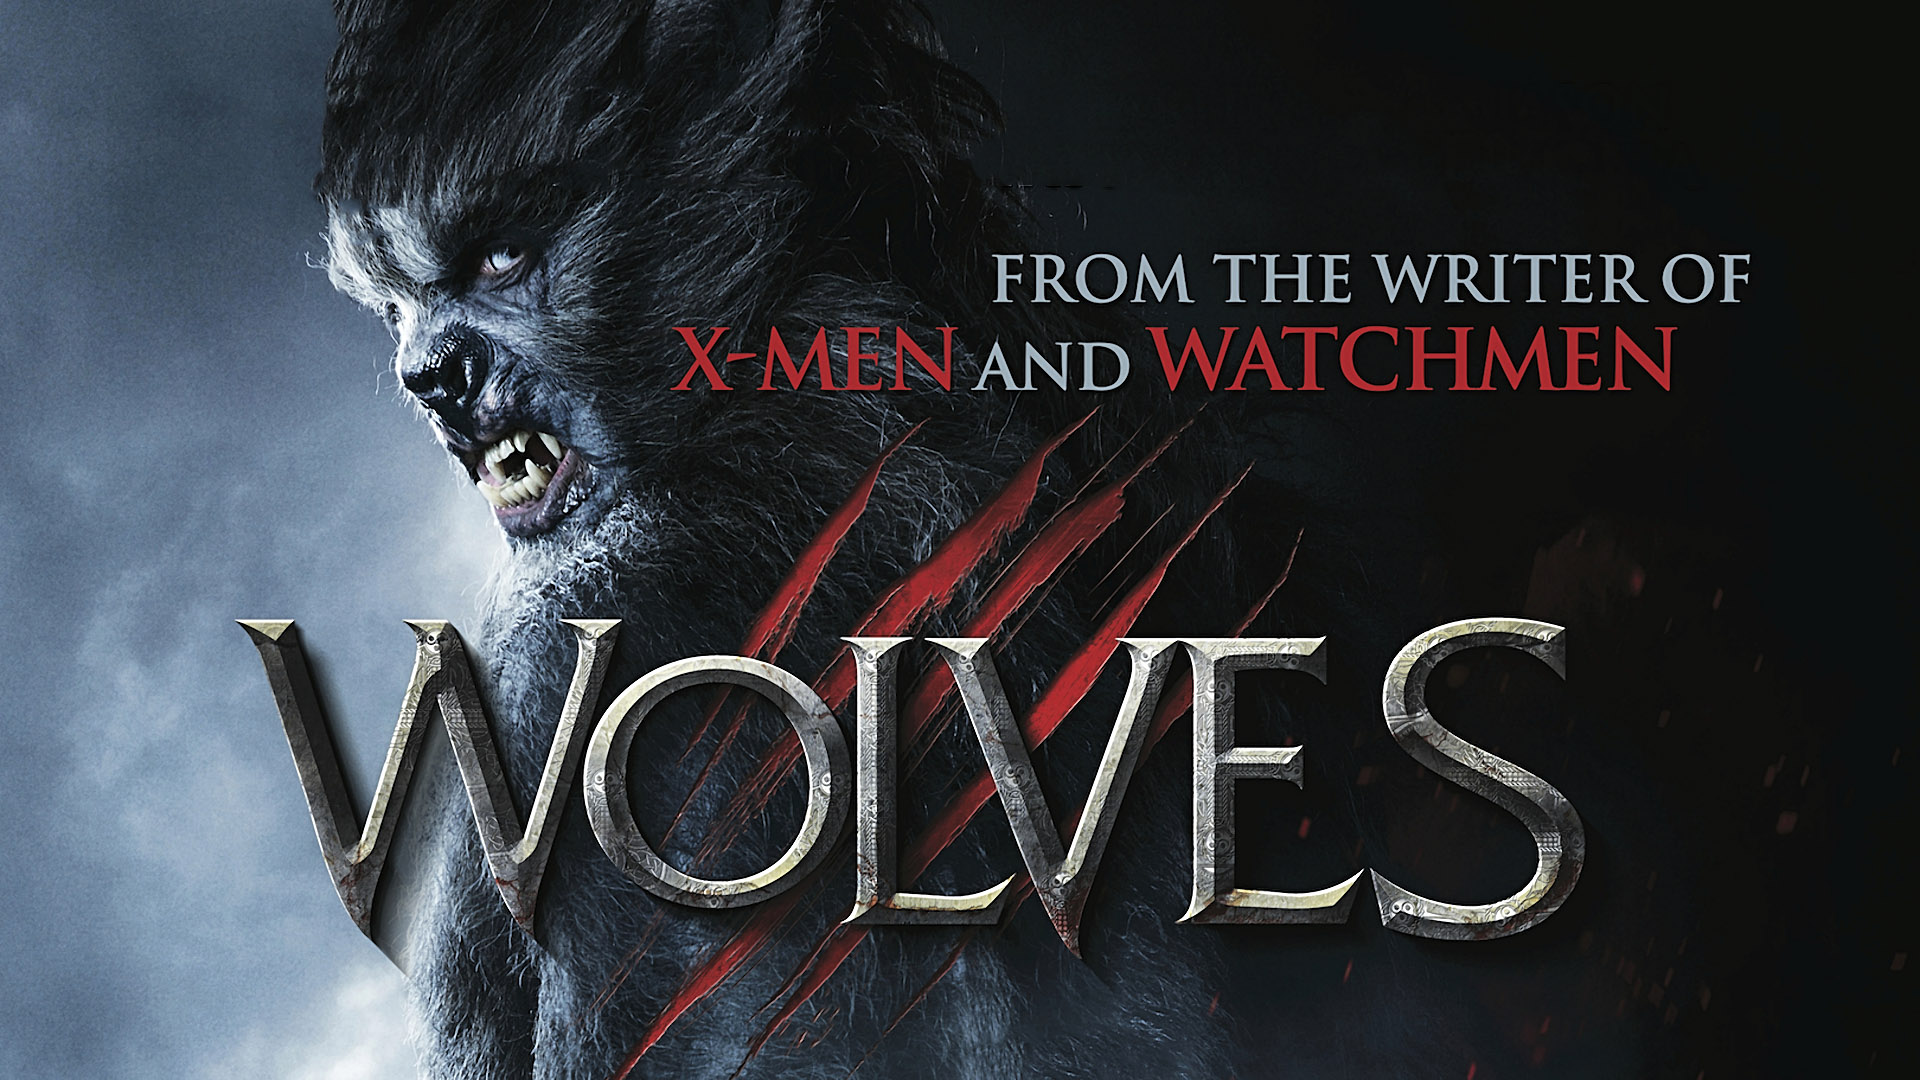 Wolves 2014 Movie Poster Wallpaper - English Movies Photos 2016 - 1920x1080  Wallpaper 